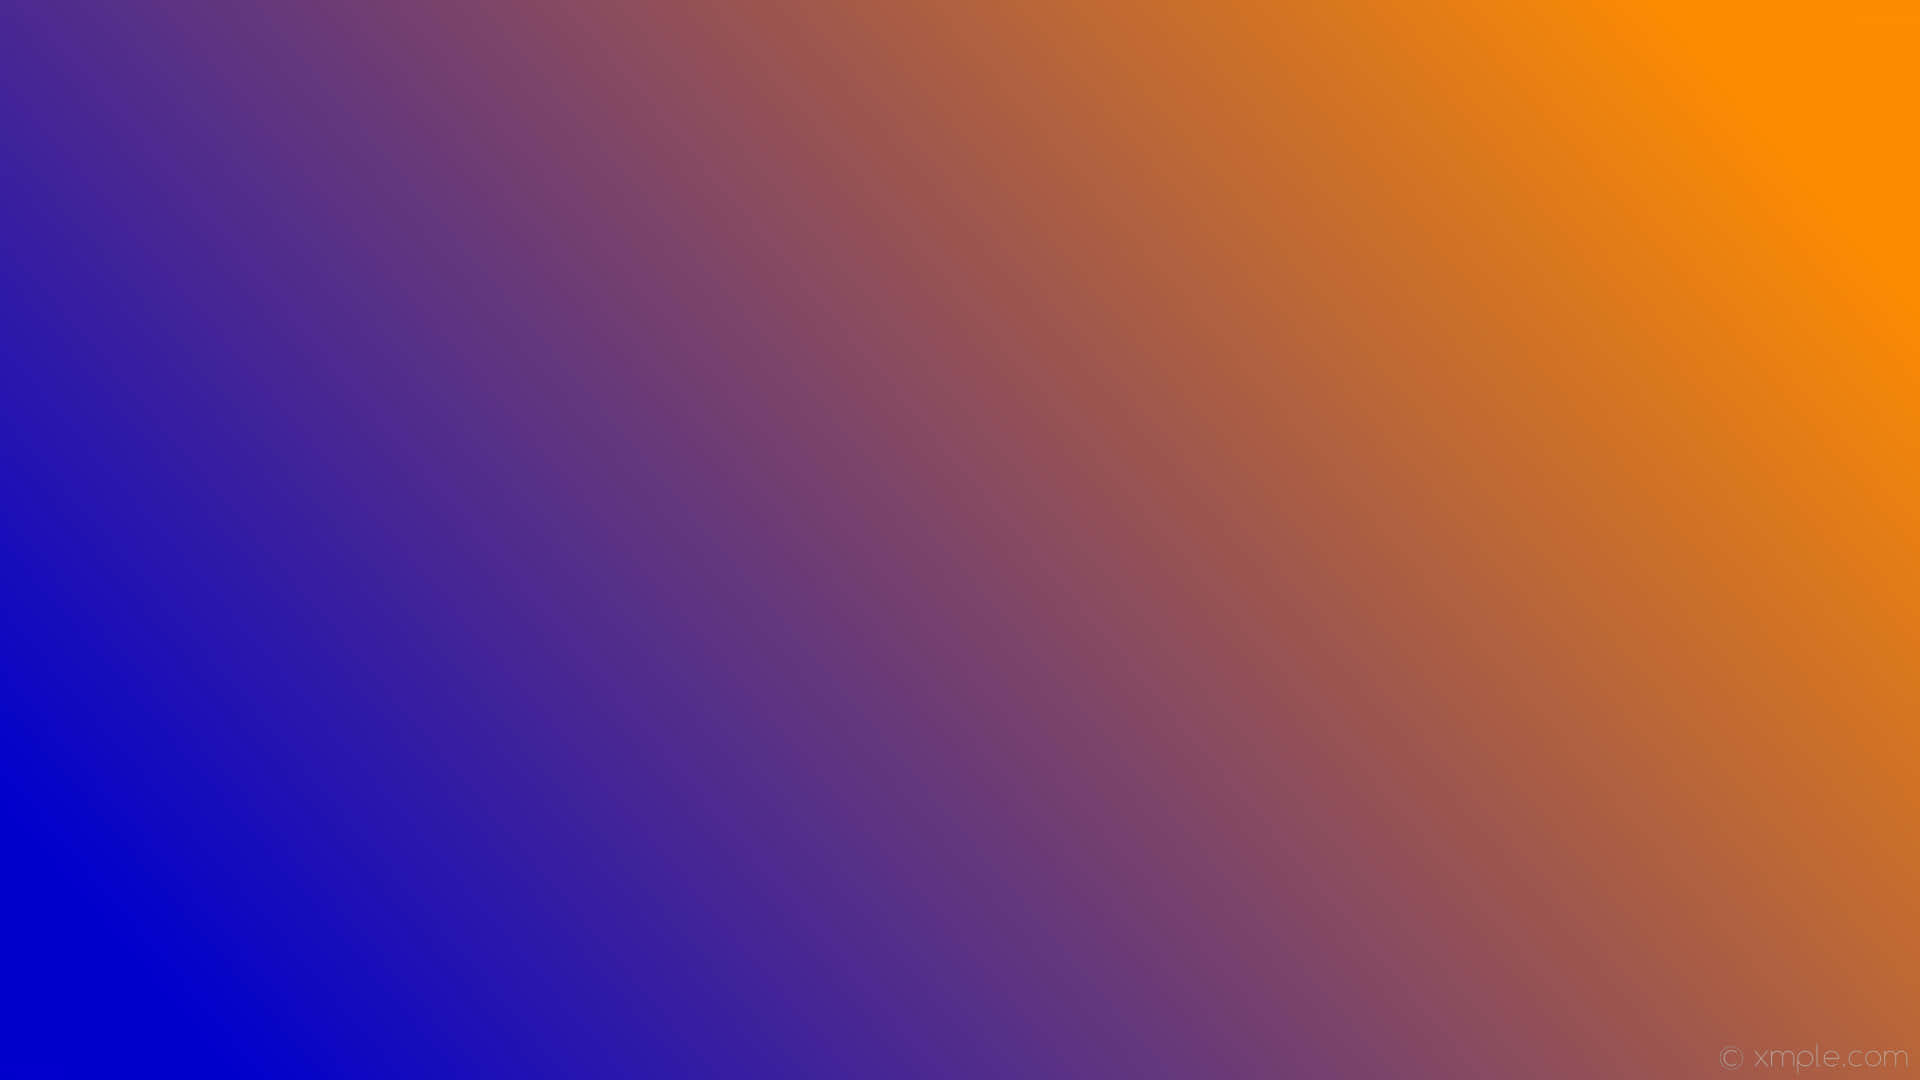 Vivid Blue and Orange Background Design